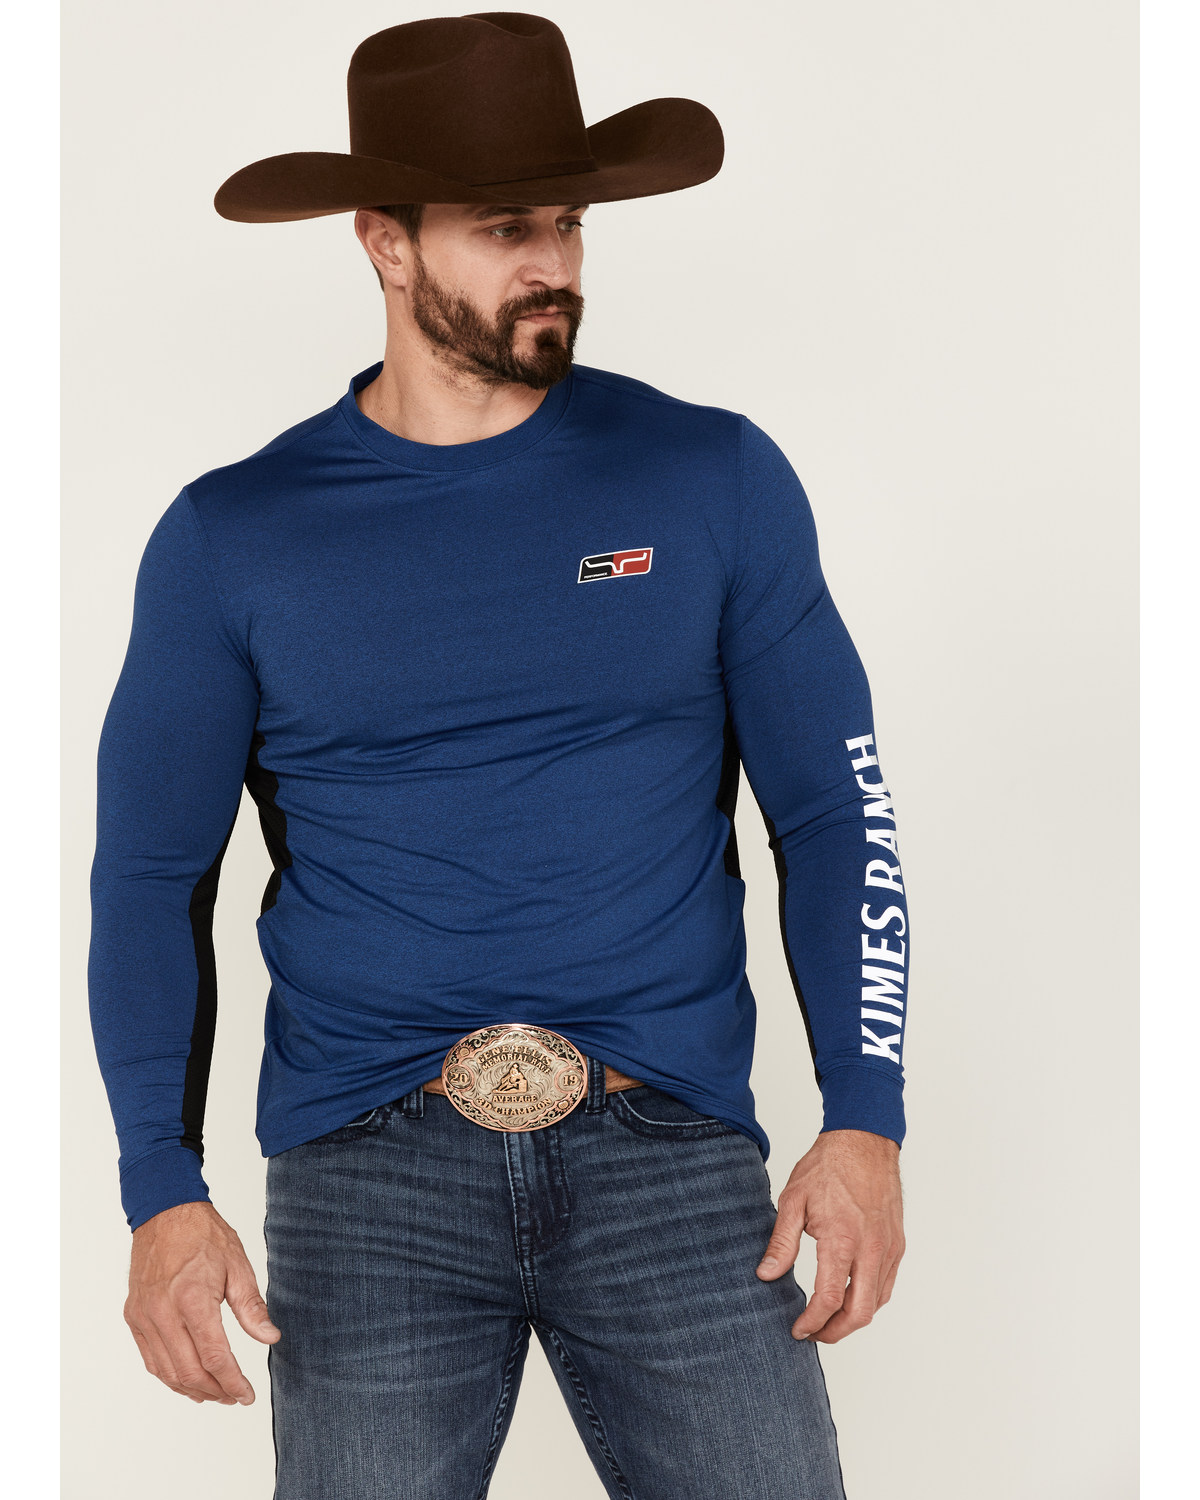 Kimes Ranch Men's K1 Long Sleeve Tech T-Shirt